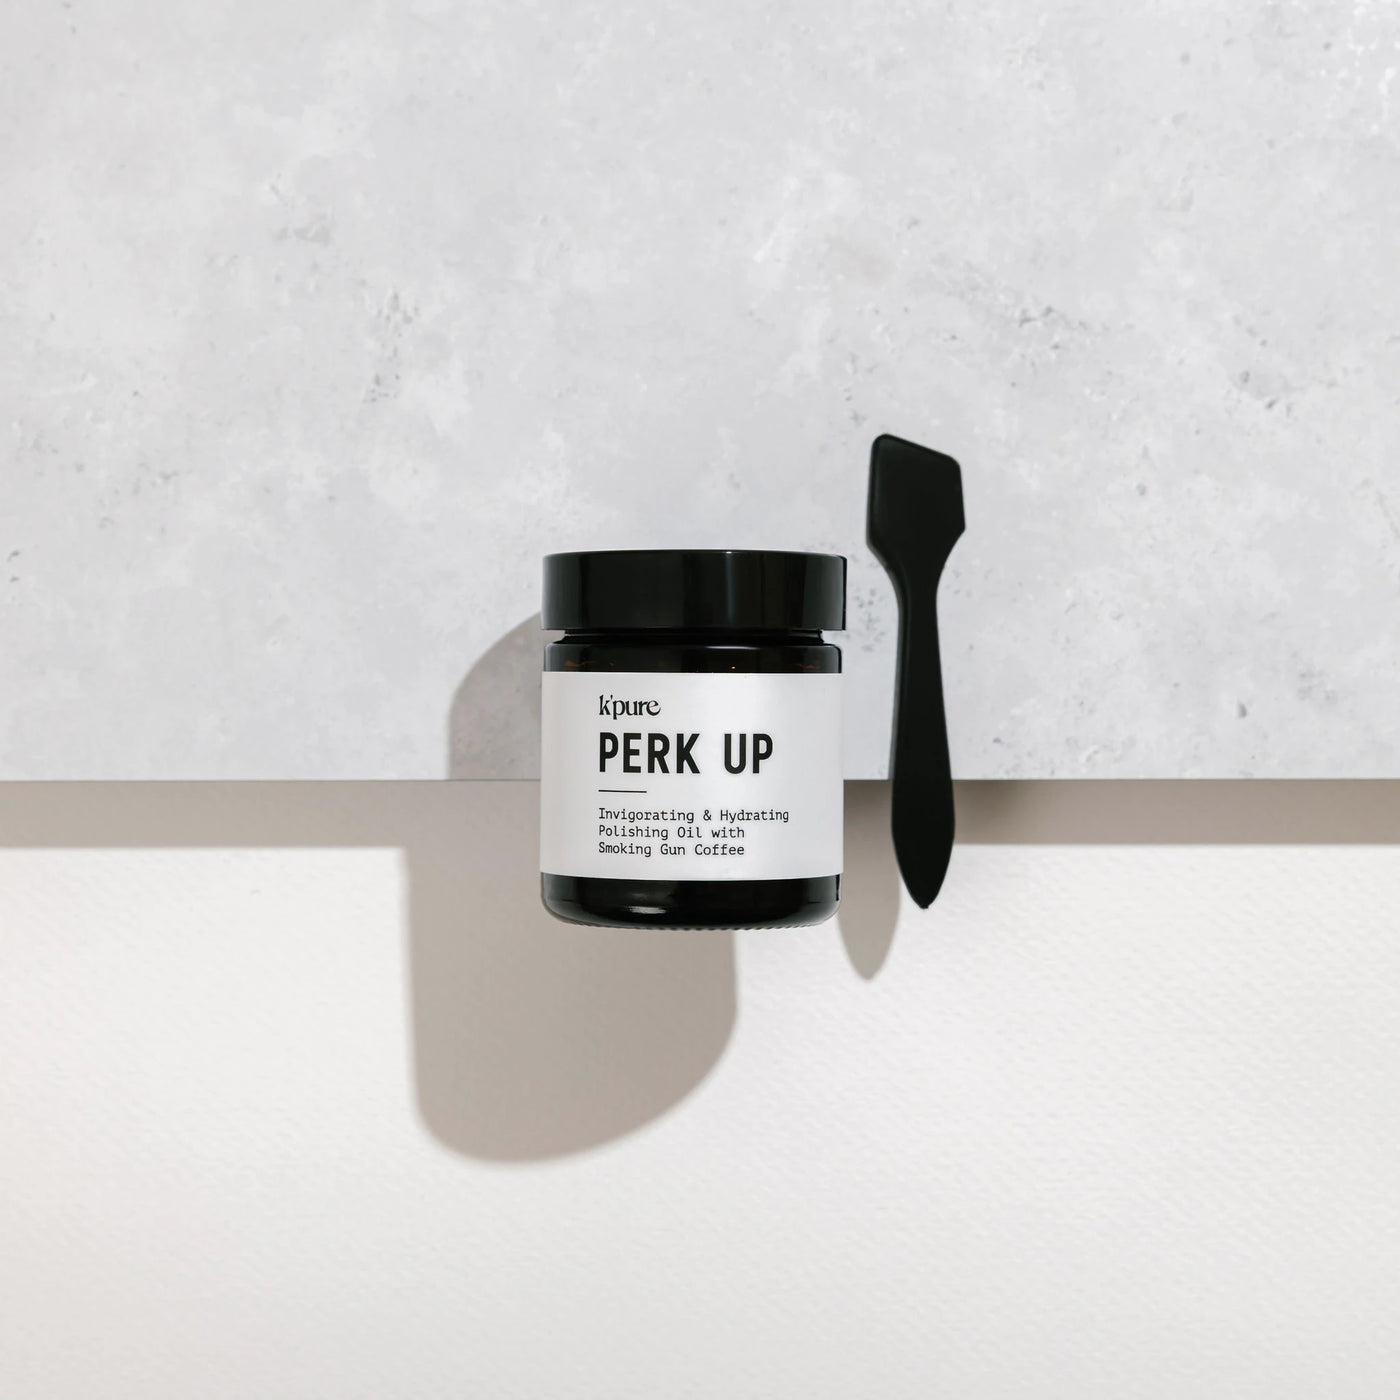 Perk Up - Skin Polishing Scrub Oil